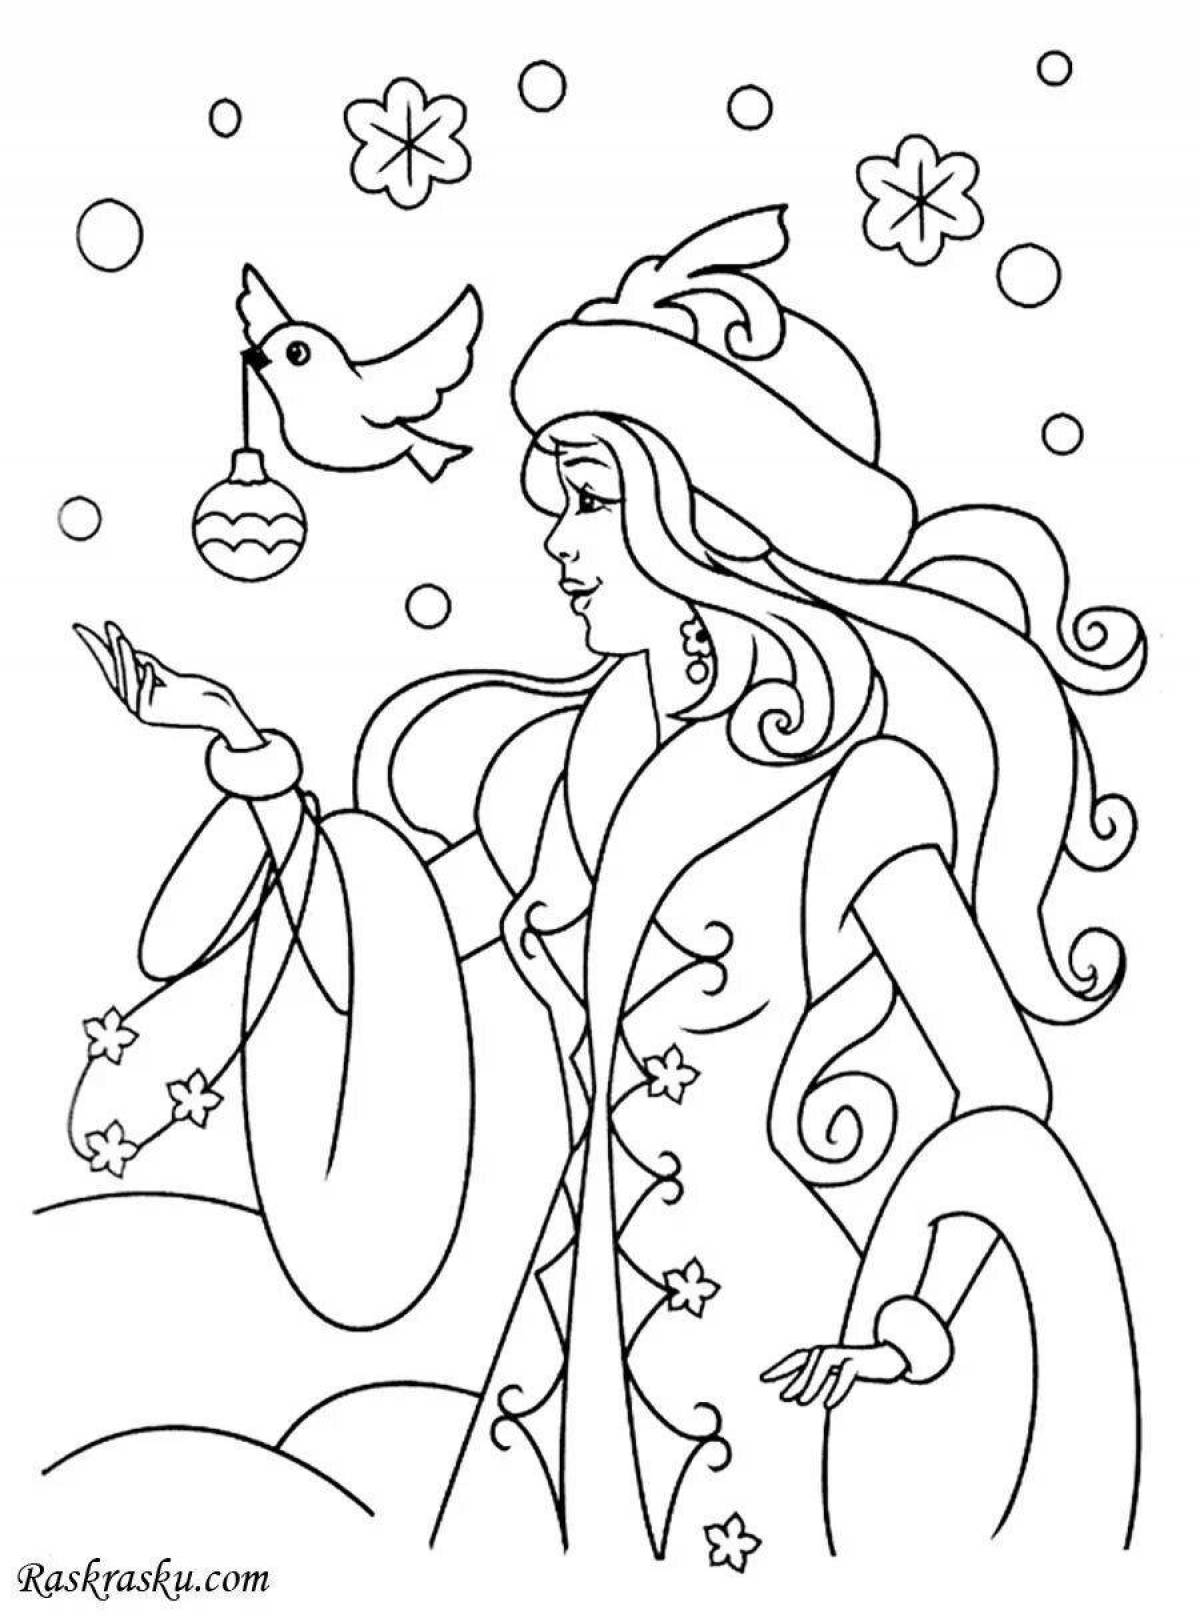 Cute Snow Maiden coloring book